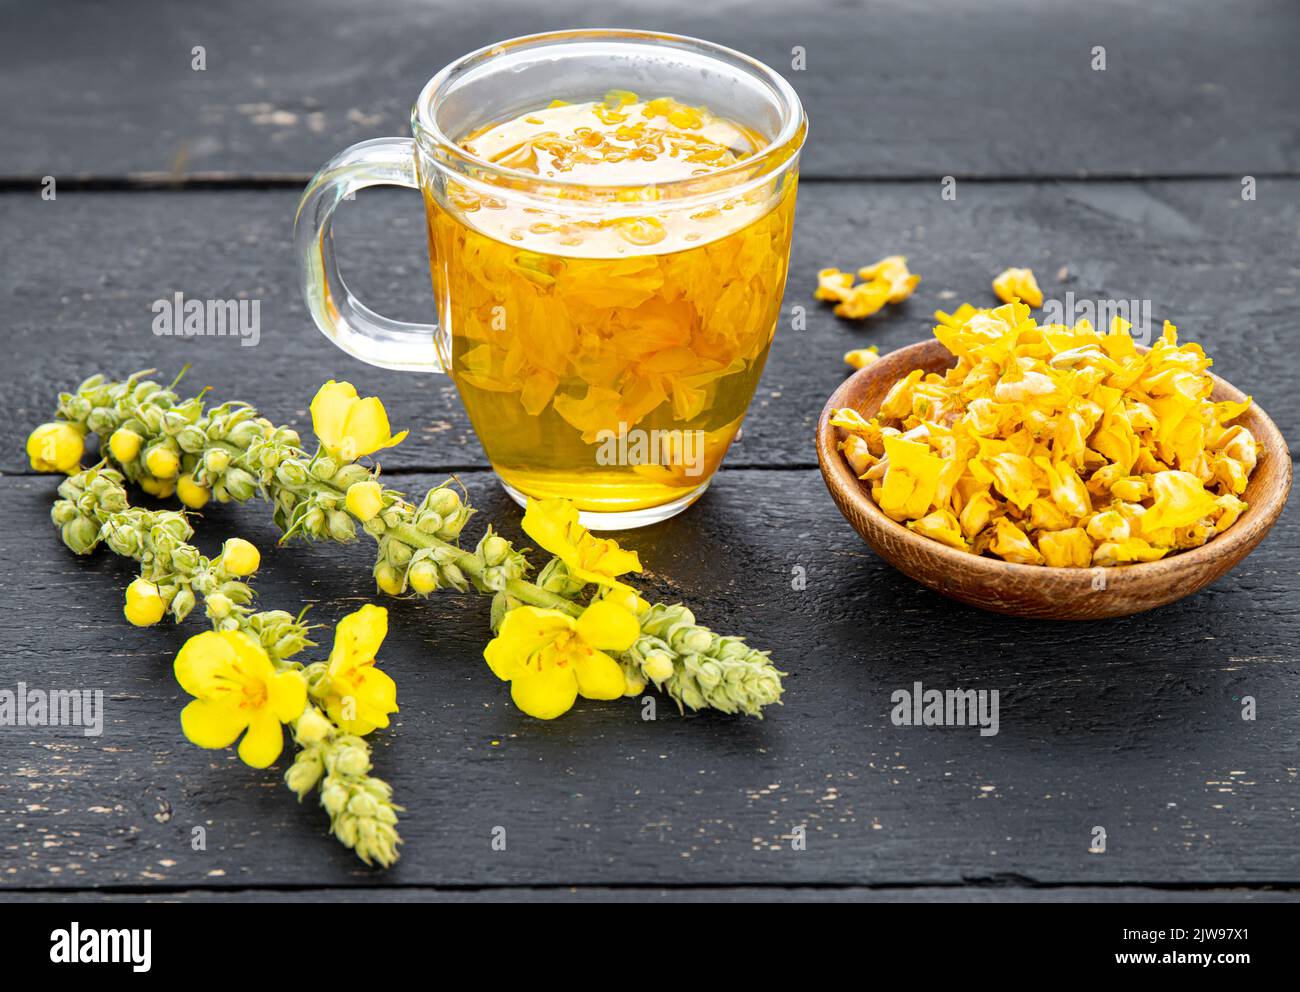 Bevanda a base di tè medicinale a base di erbe fatta di Verbascum thapsus, la grande mulleina, più grande mulleina o comune mulleina. Petali di fiori secchi gialli. Bicchiere di vetro. Foto Stock